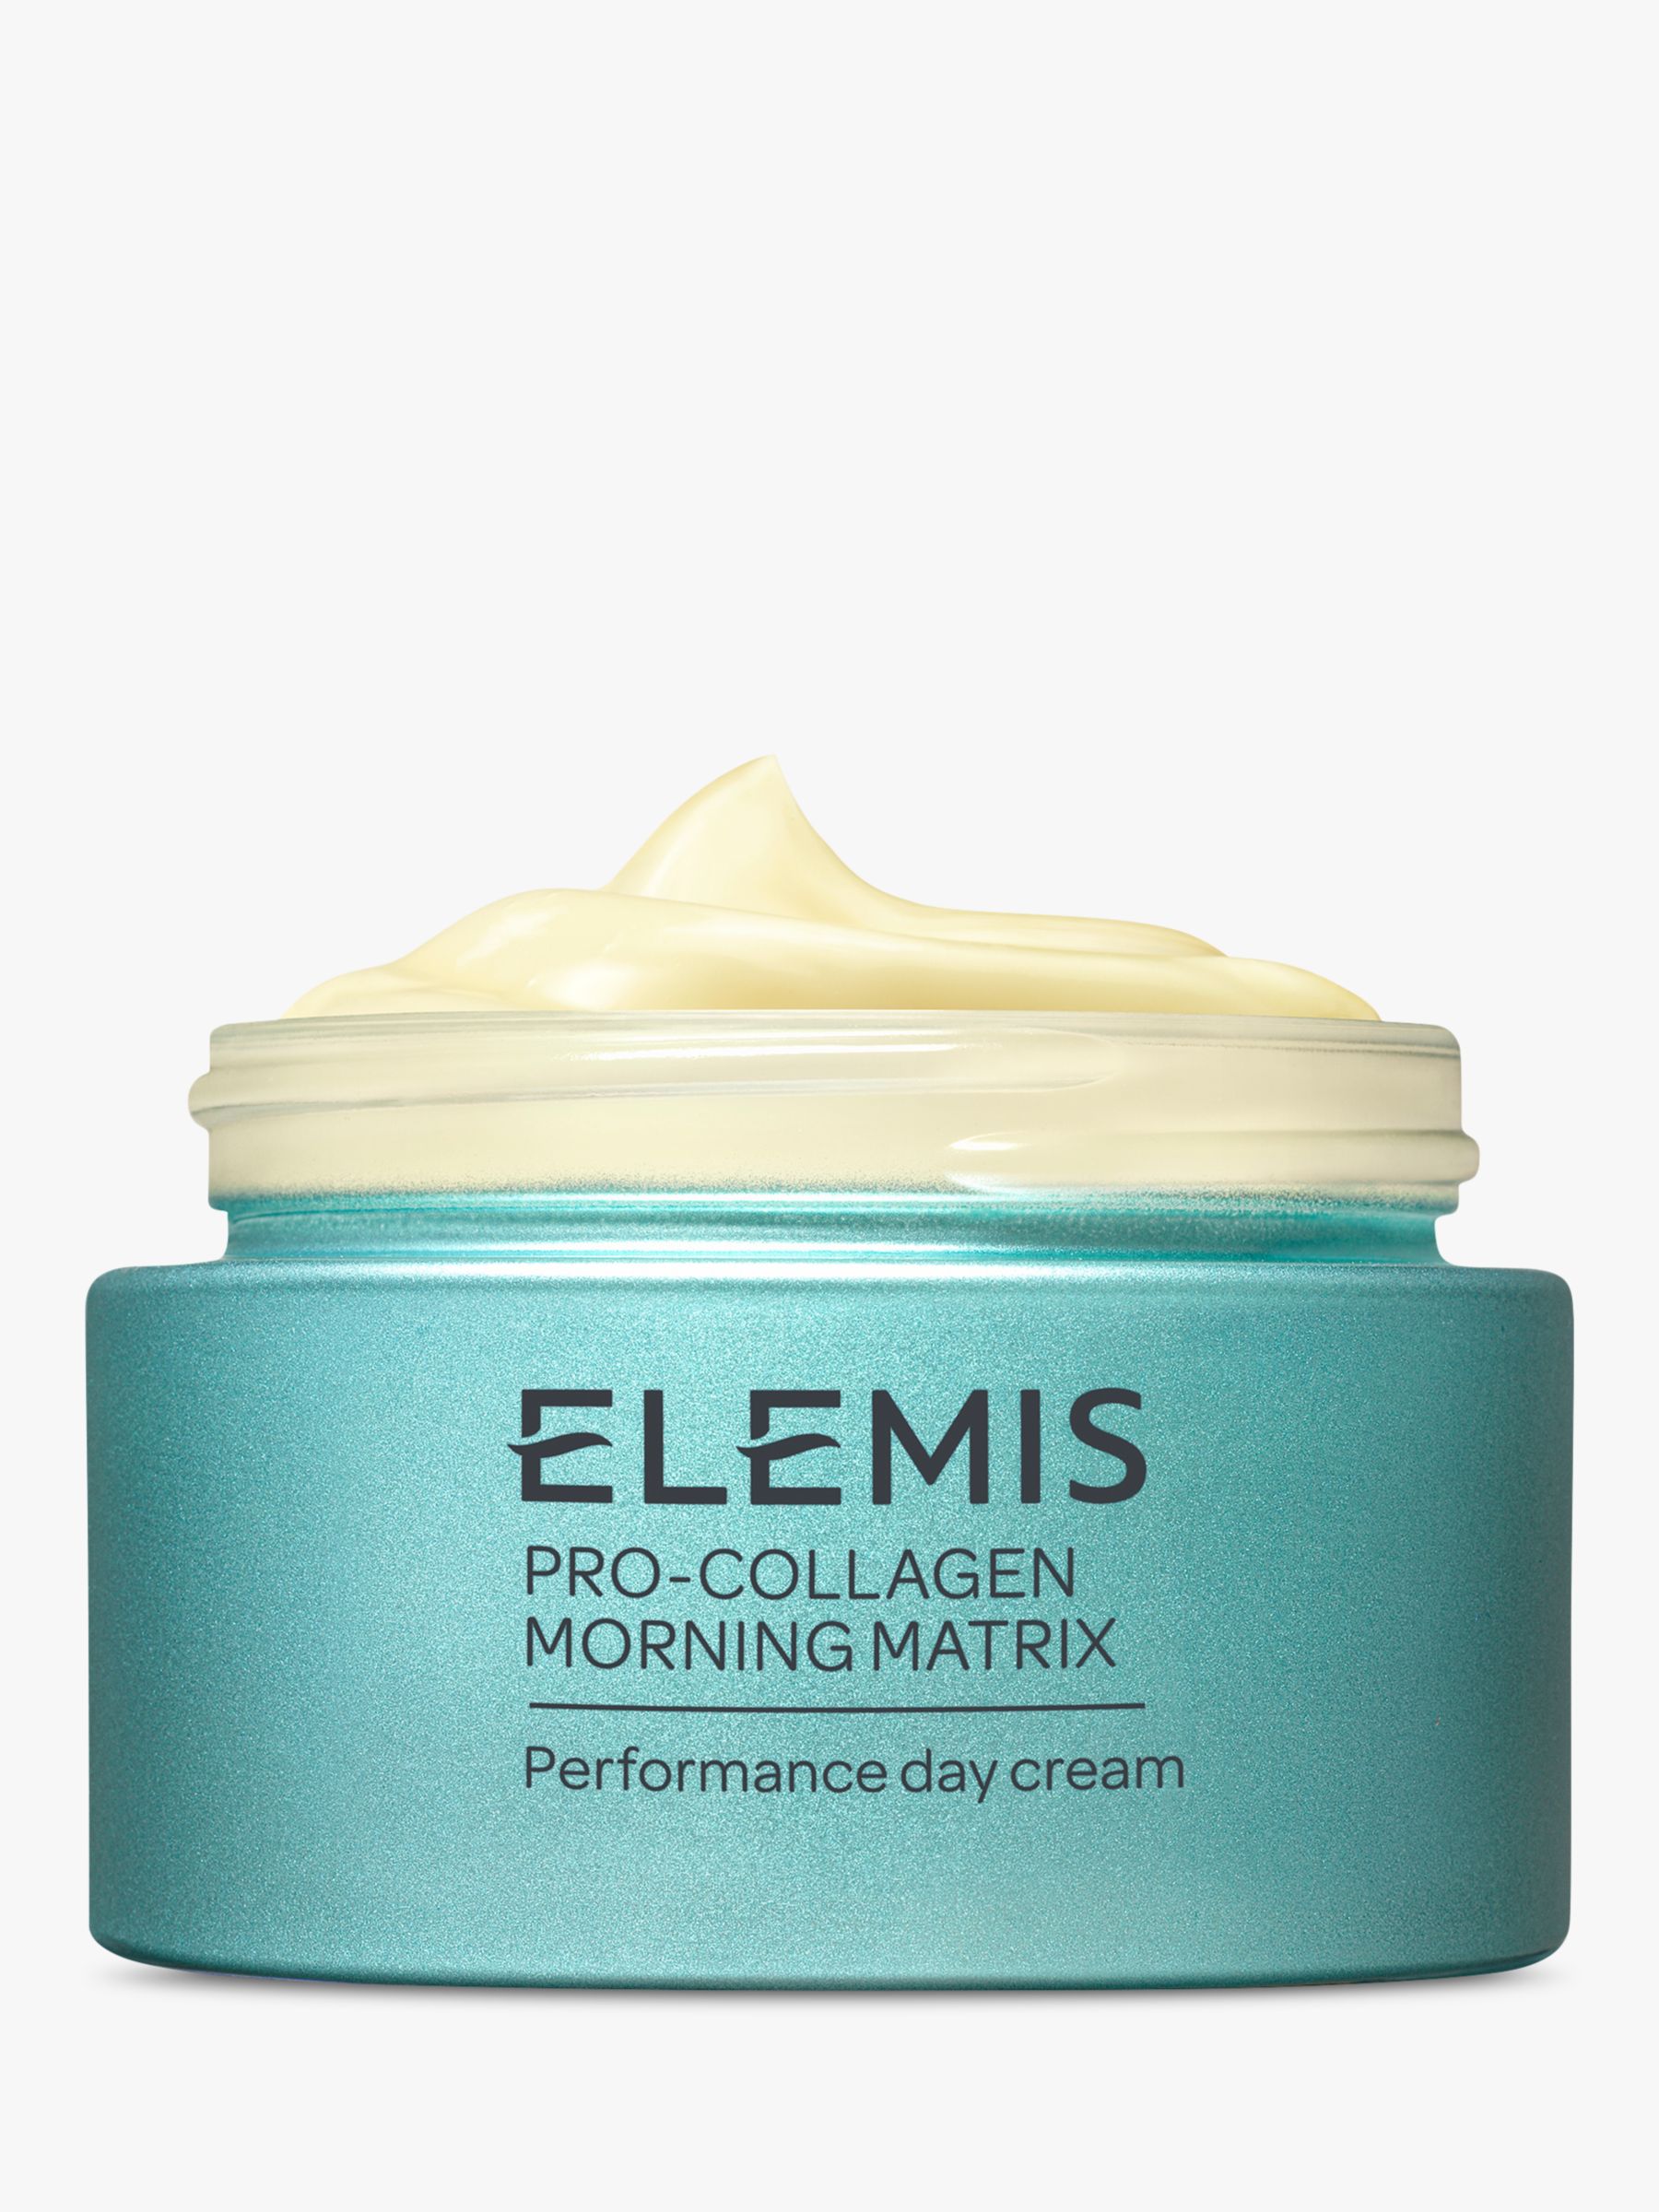 Elemis Pro-Collagen Morning Matrix Performance Day Cream, 50ml 1